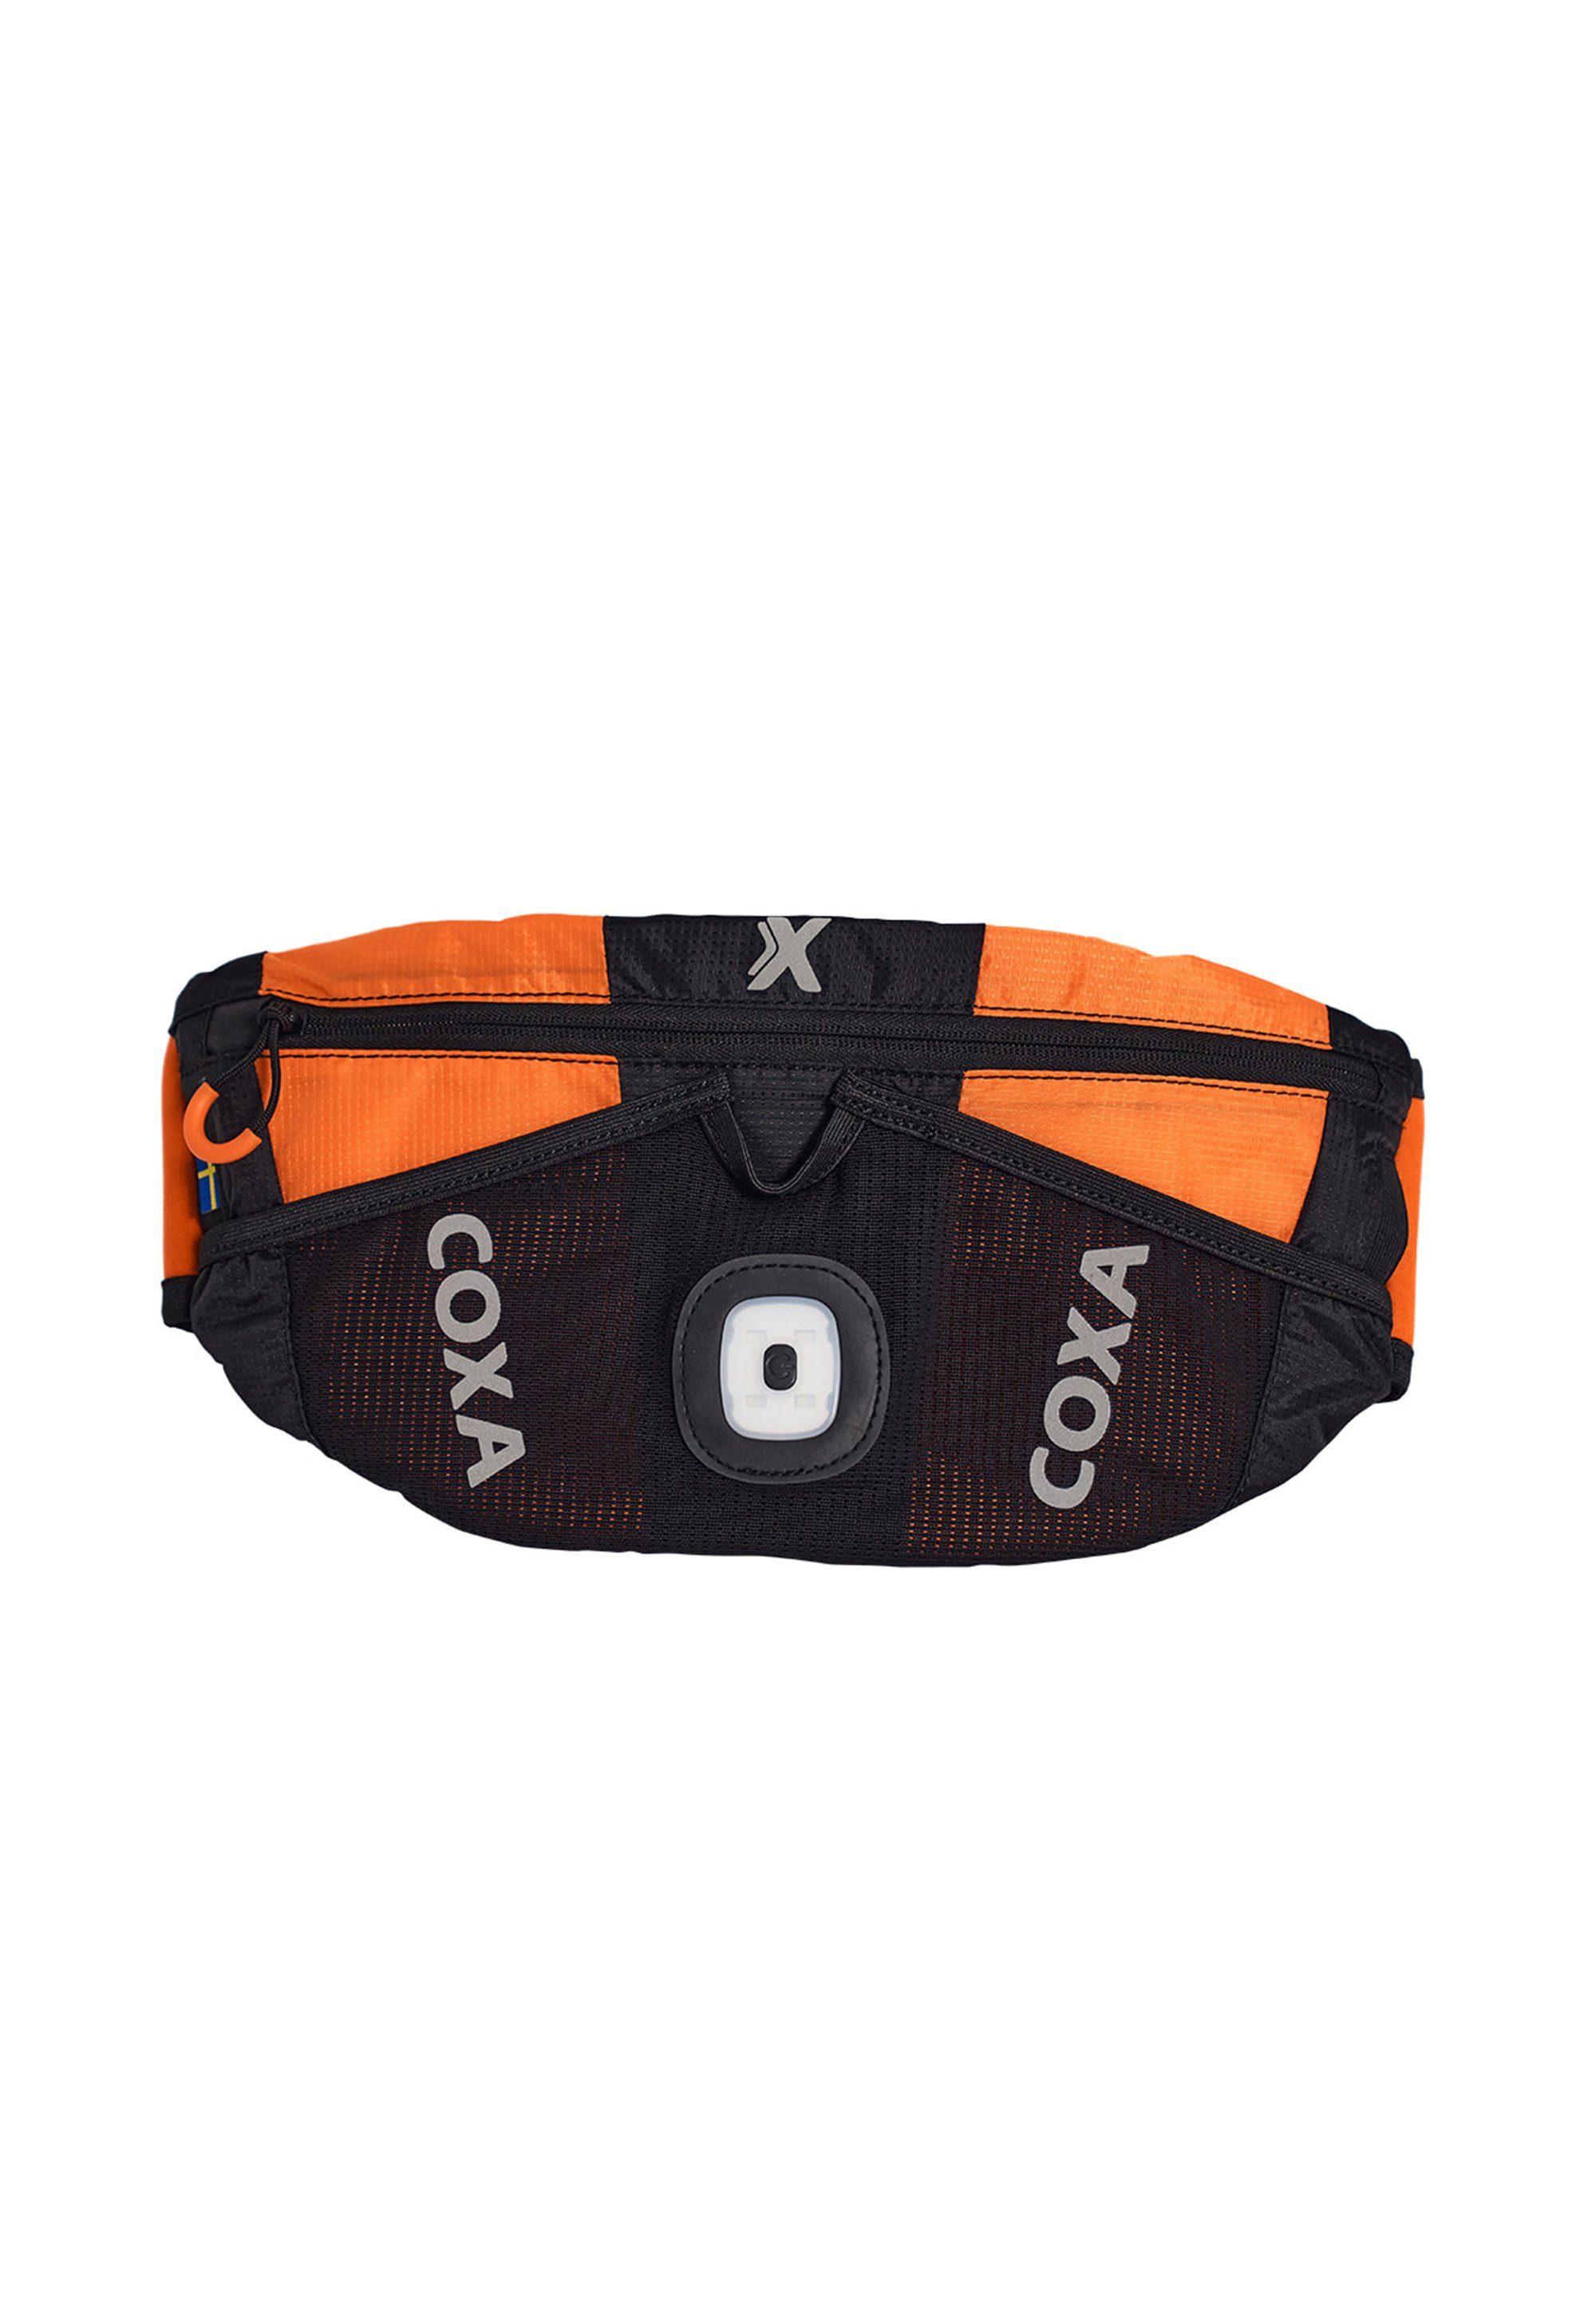 Gürteltasche outdoor Orange, Coxa Carry sports, WR1